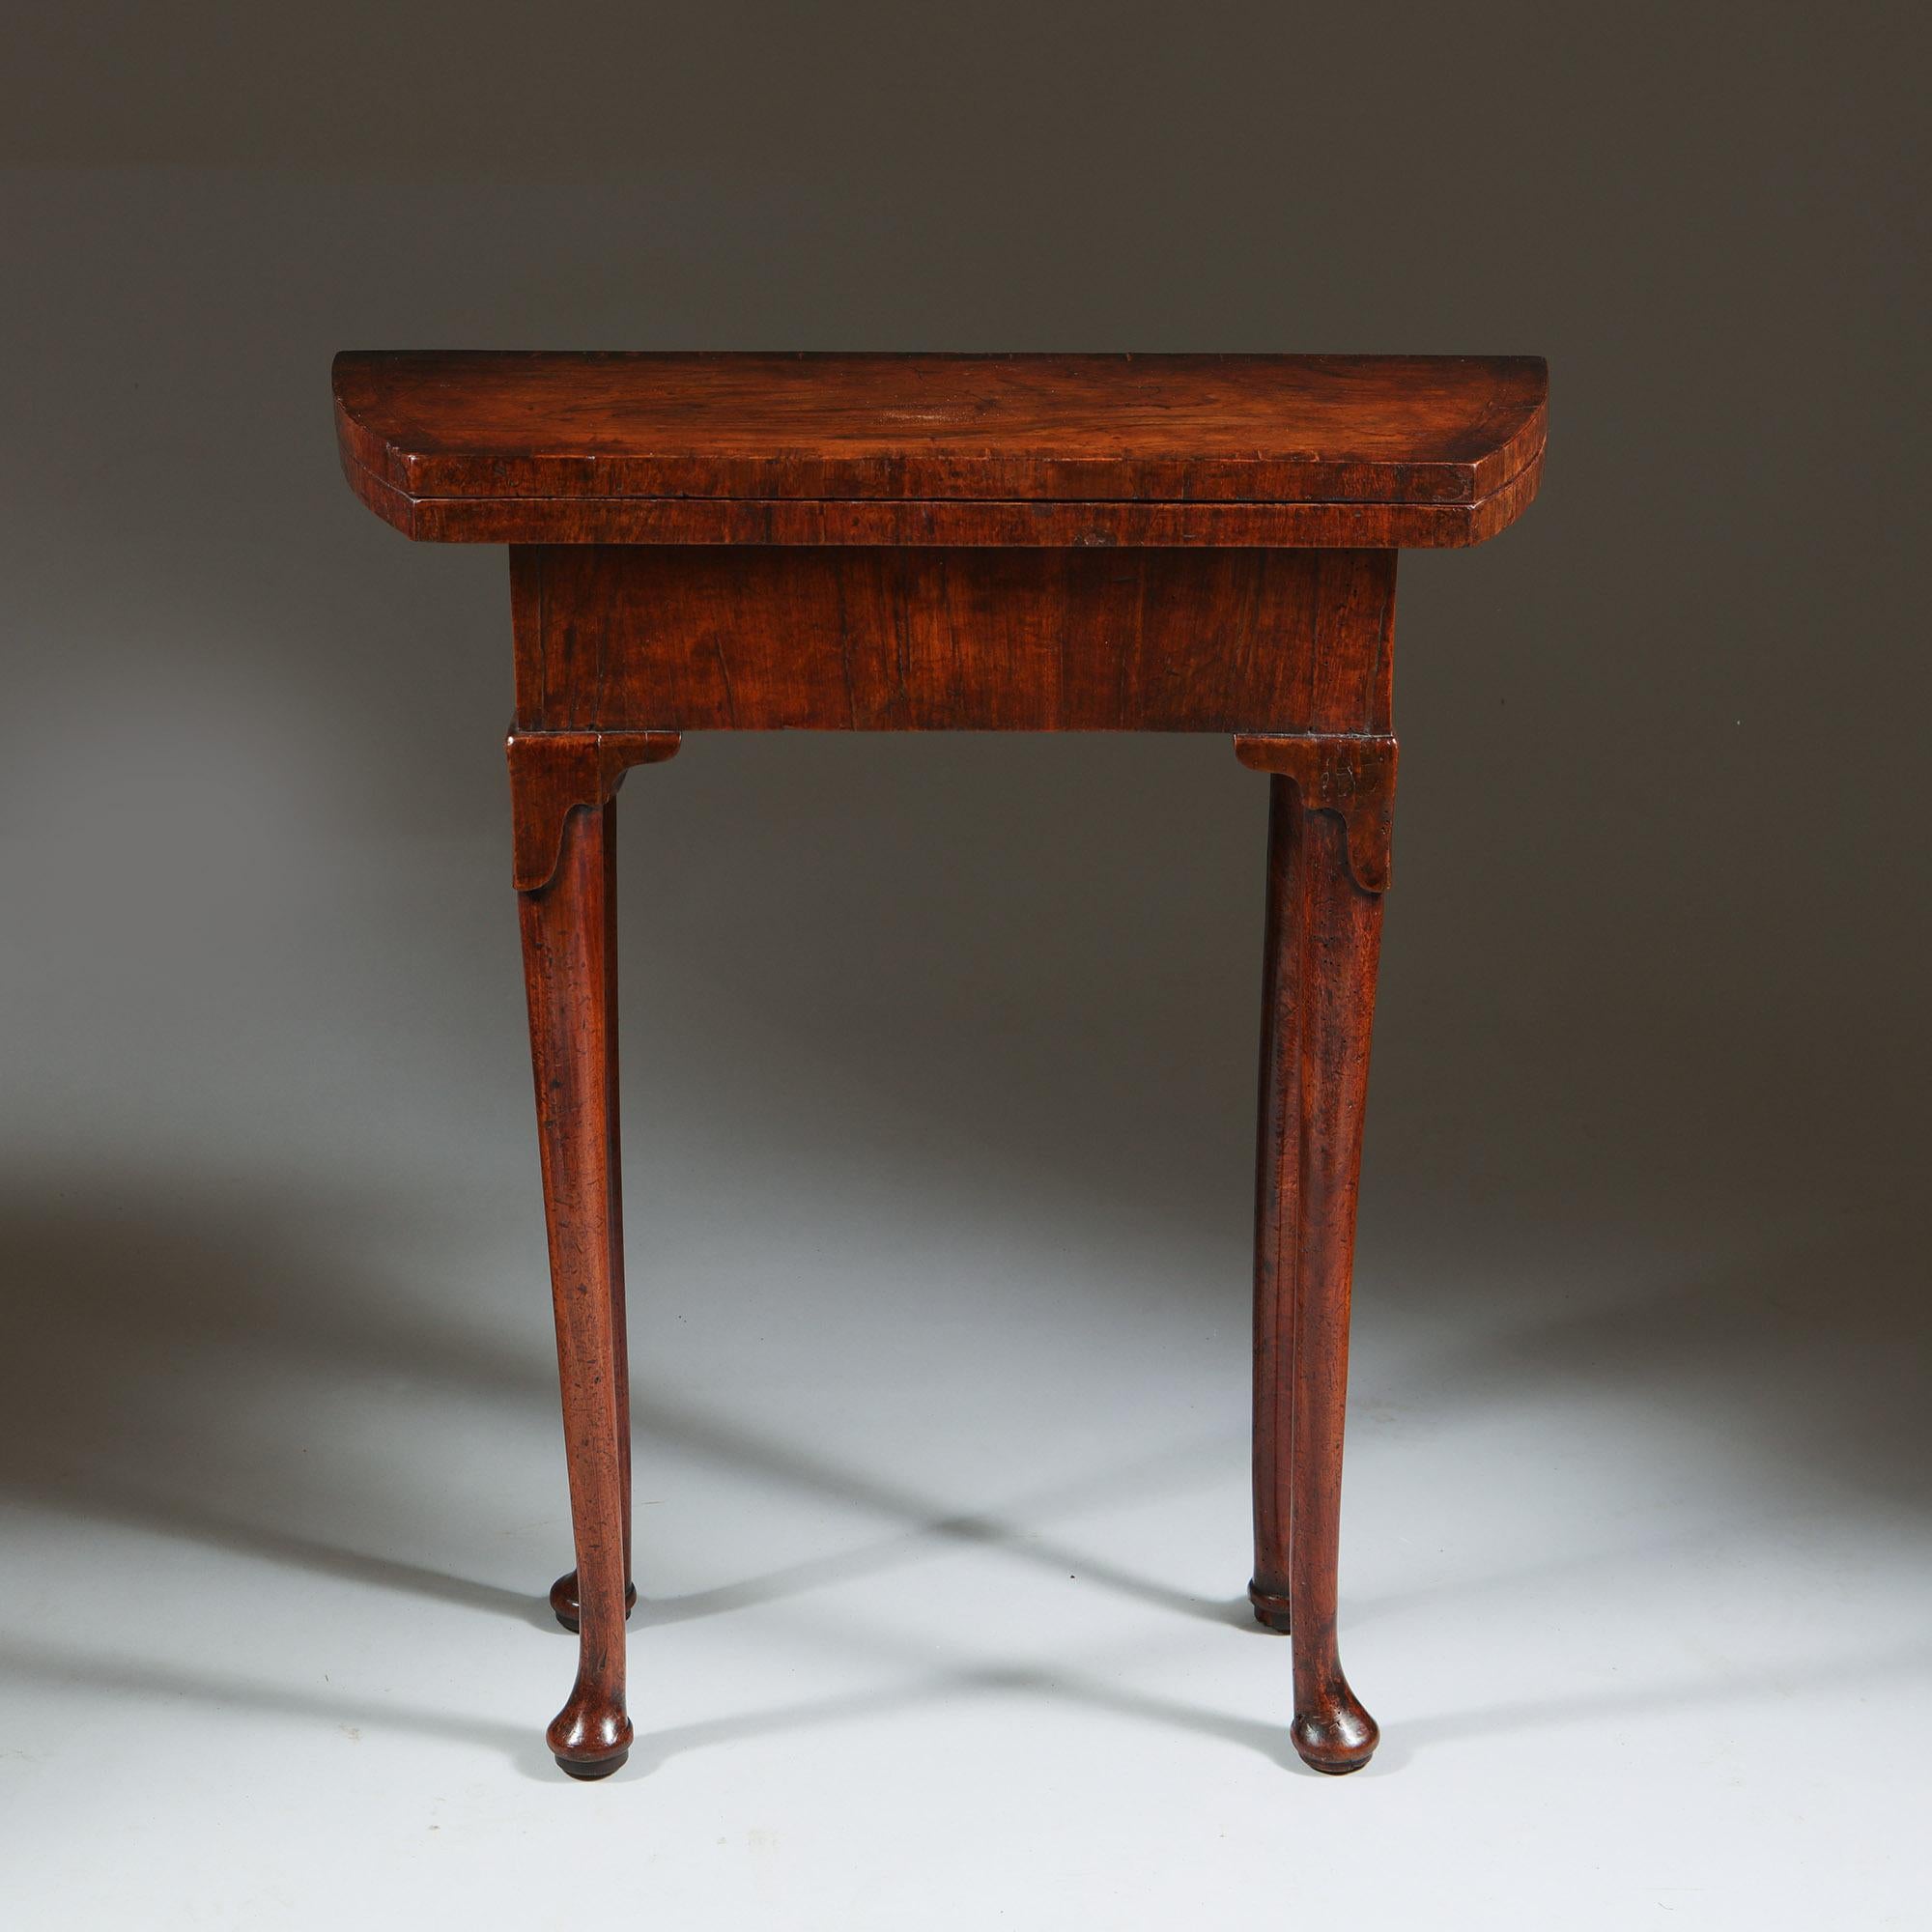 A Unique Early 18th Century Diminutive George I Figured Walnut Bachelors Table-1